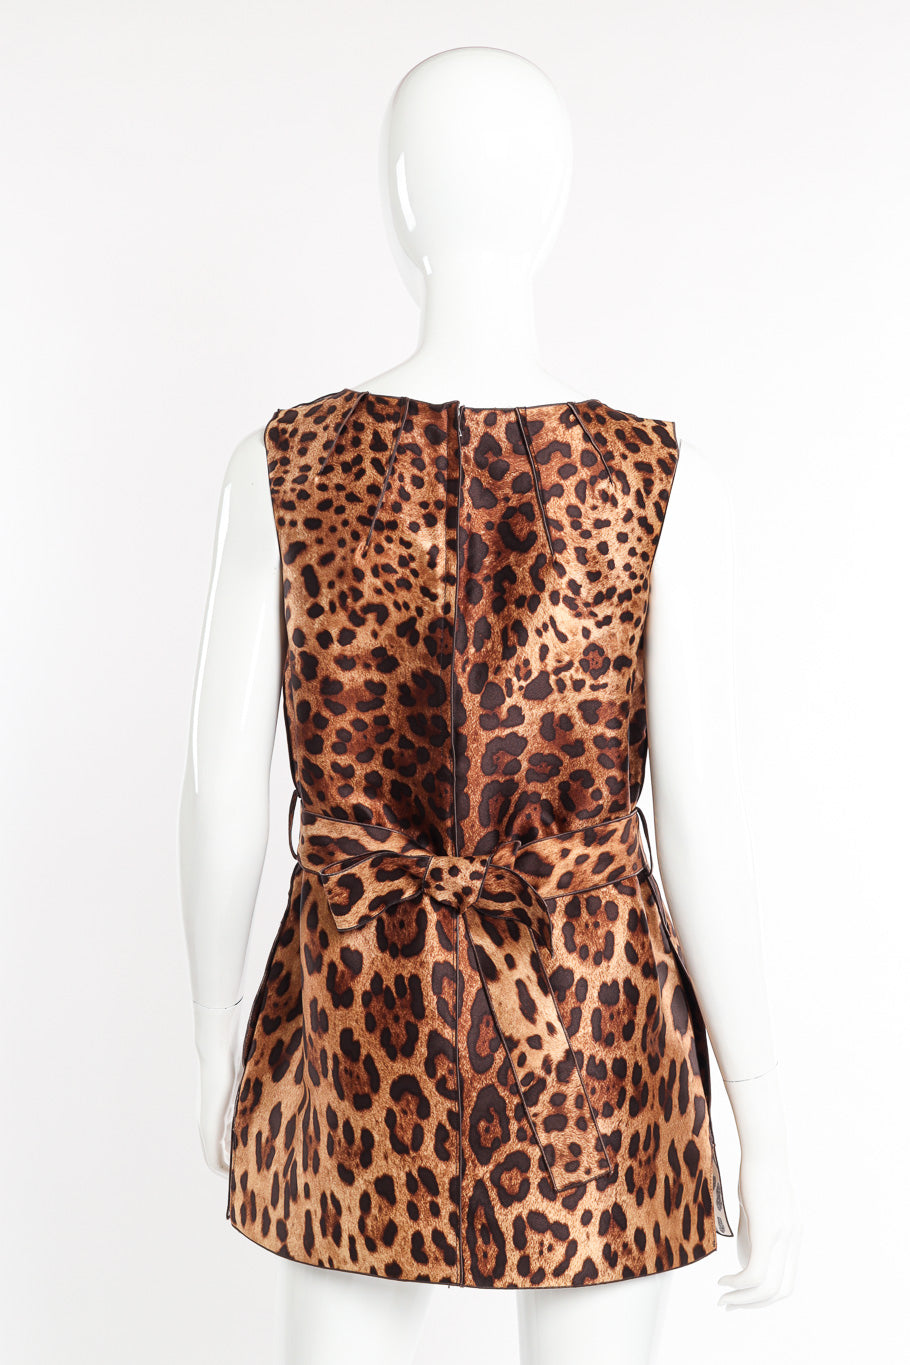 Dolce & Gabbana Belted Leopard Mini Dress back view @recessla